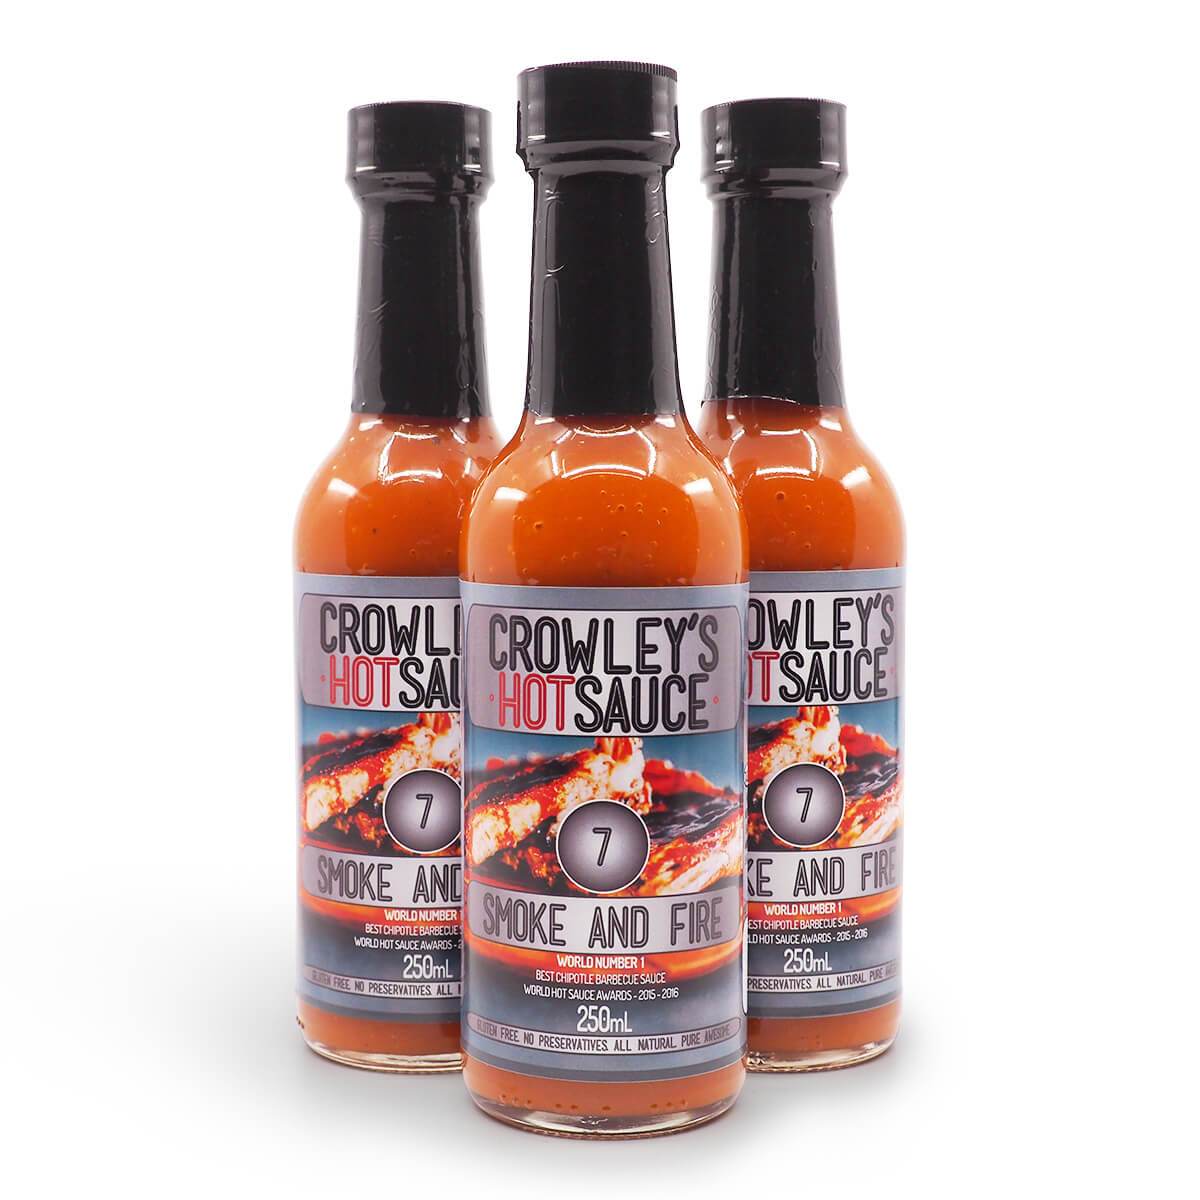 Crowleys Hot Sauce Smoke and Fire